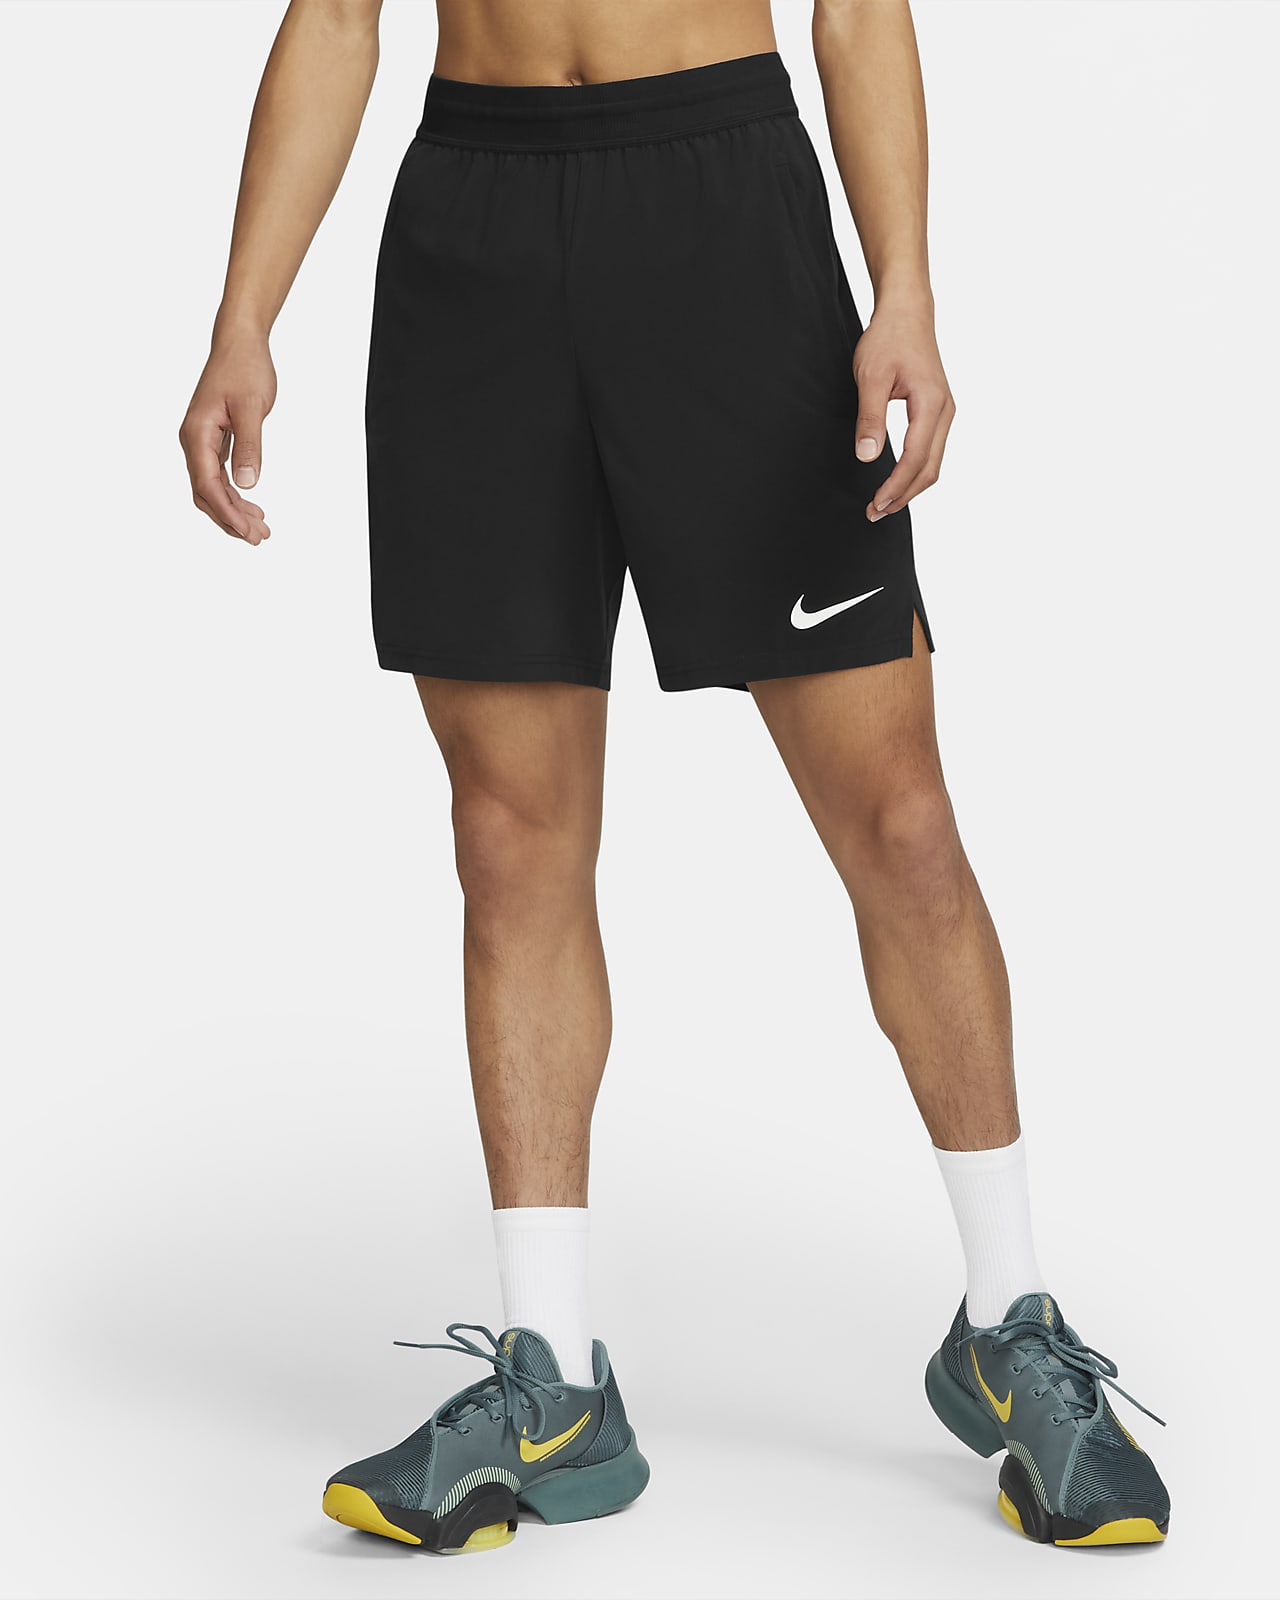 Nike Pro Dri-FIT Flex Vent Max Men's 8" (20.5cm approx.) Training Shorts